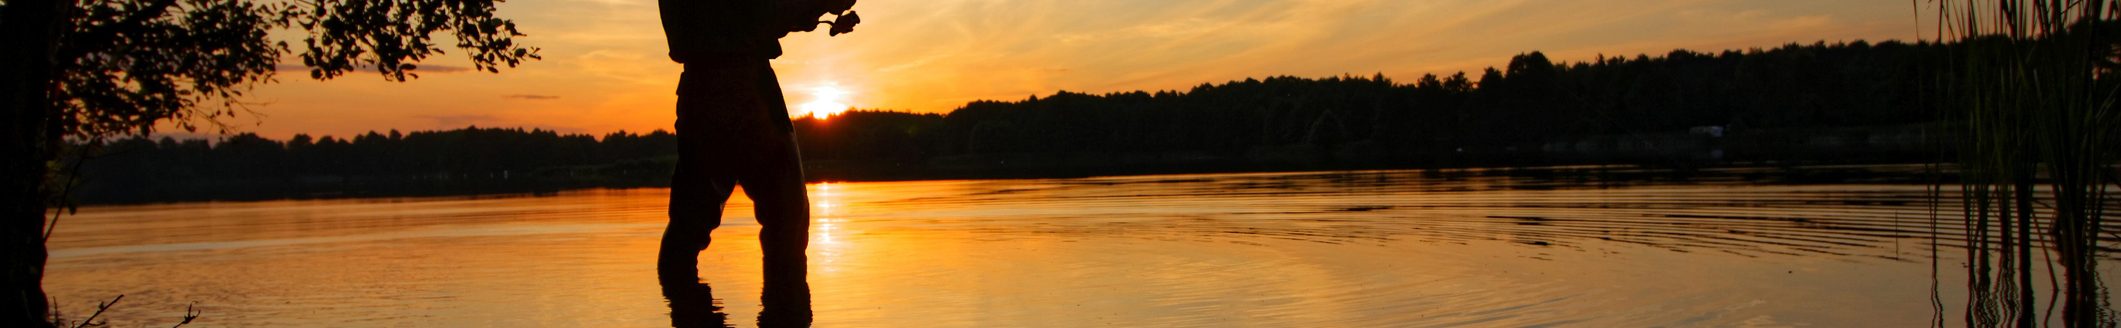 Angler silhouette during summer sunset (Photo: iStock - Marek Trawczynski)